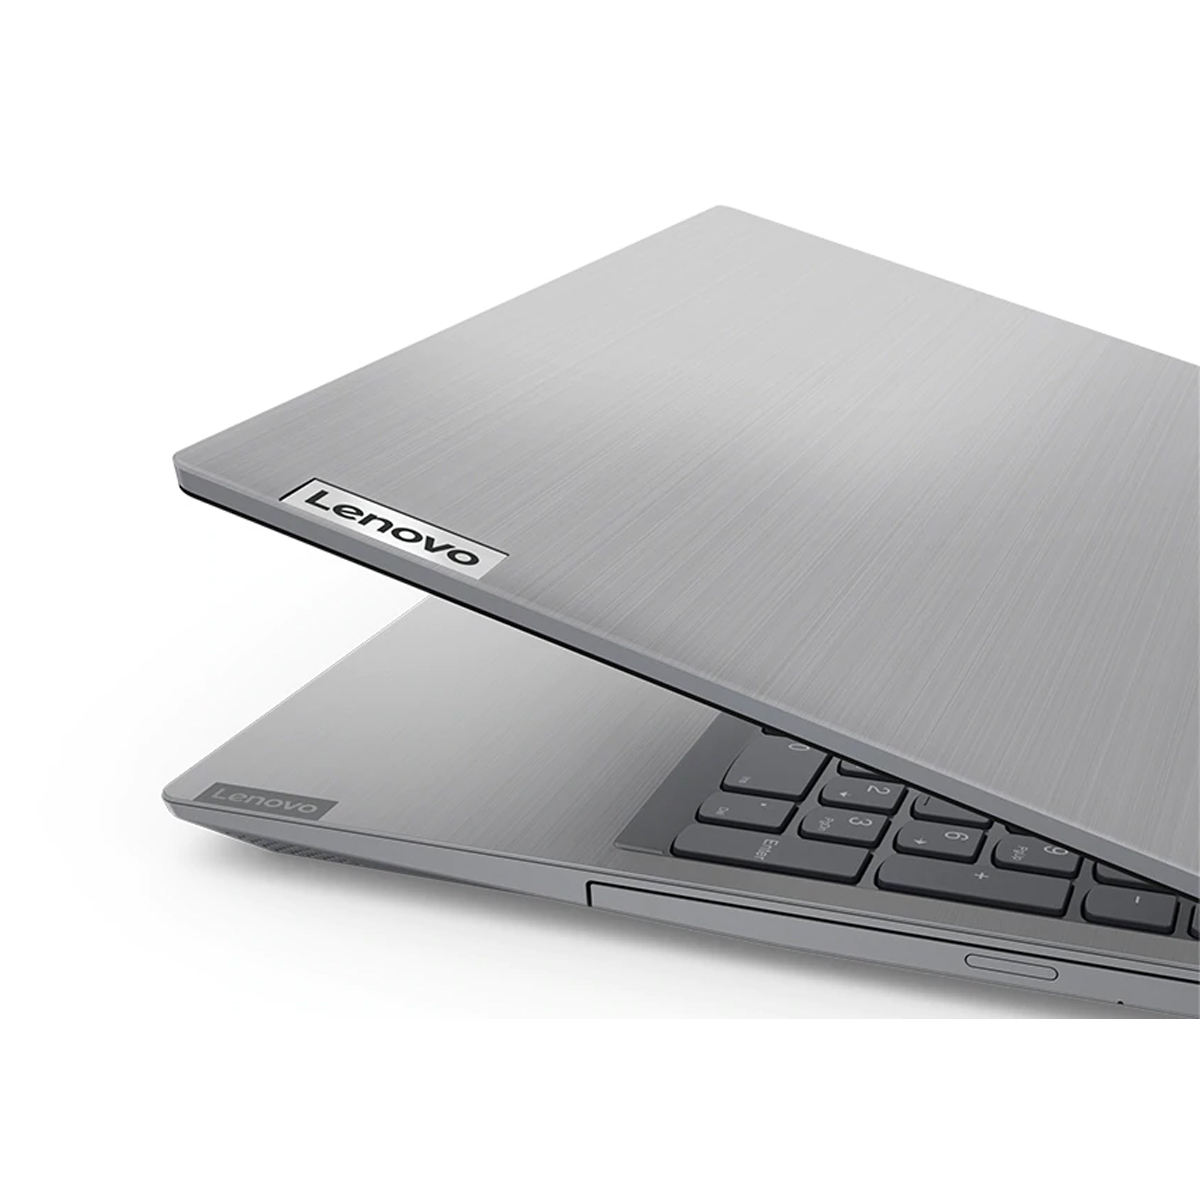 Laptop LENOVO L340 15IWL: Procesador Core i38145U 2.1GHz, Ram  8Gb, Disco duro 1Tb, Display 15.6" (1366x768), con DVD-RW, Webcam, BT WIN10, 8th gen, color gris platino